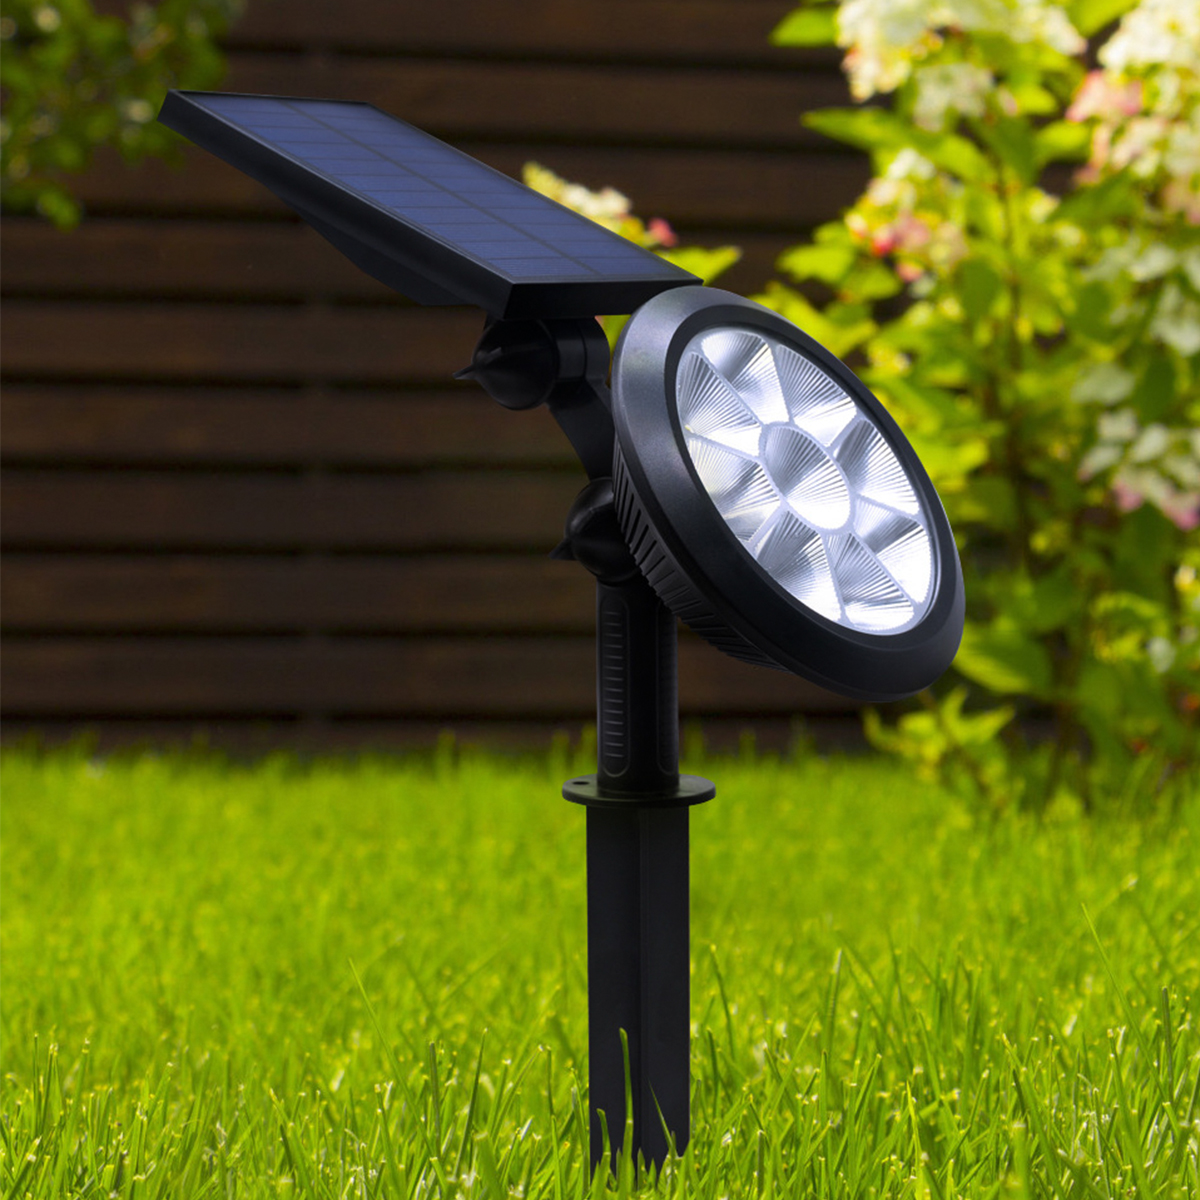 Solar Garden Light Spot Outdoor 9 LED Garden Lawn Landscape Path Wall Lamp Waterproof for Home Garden Wedding